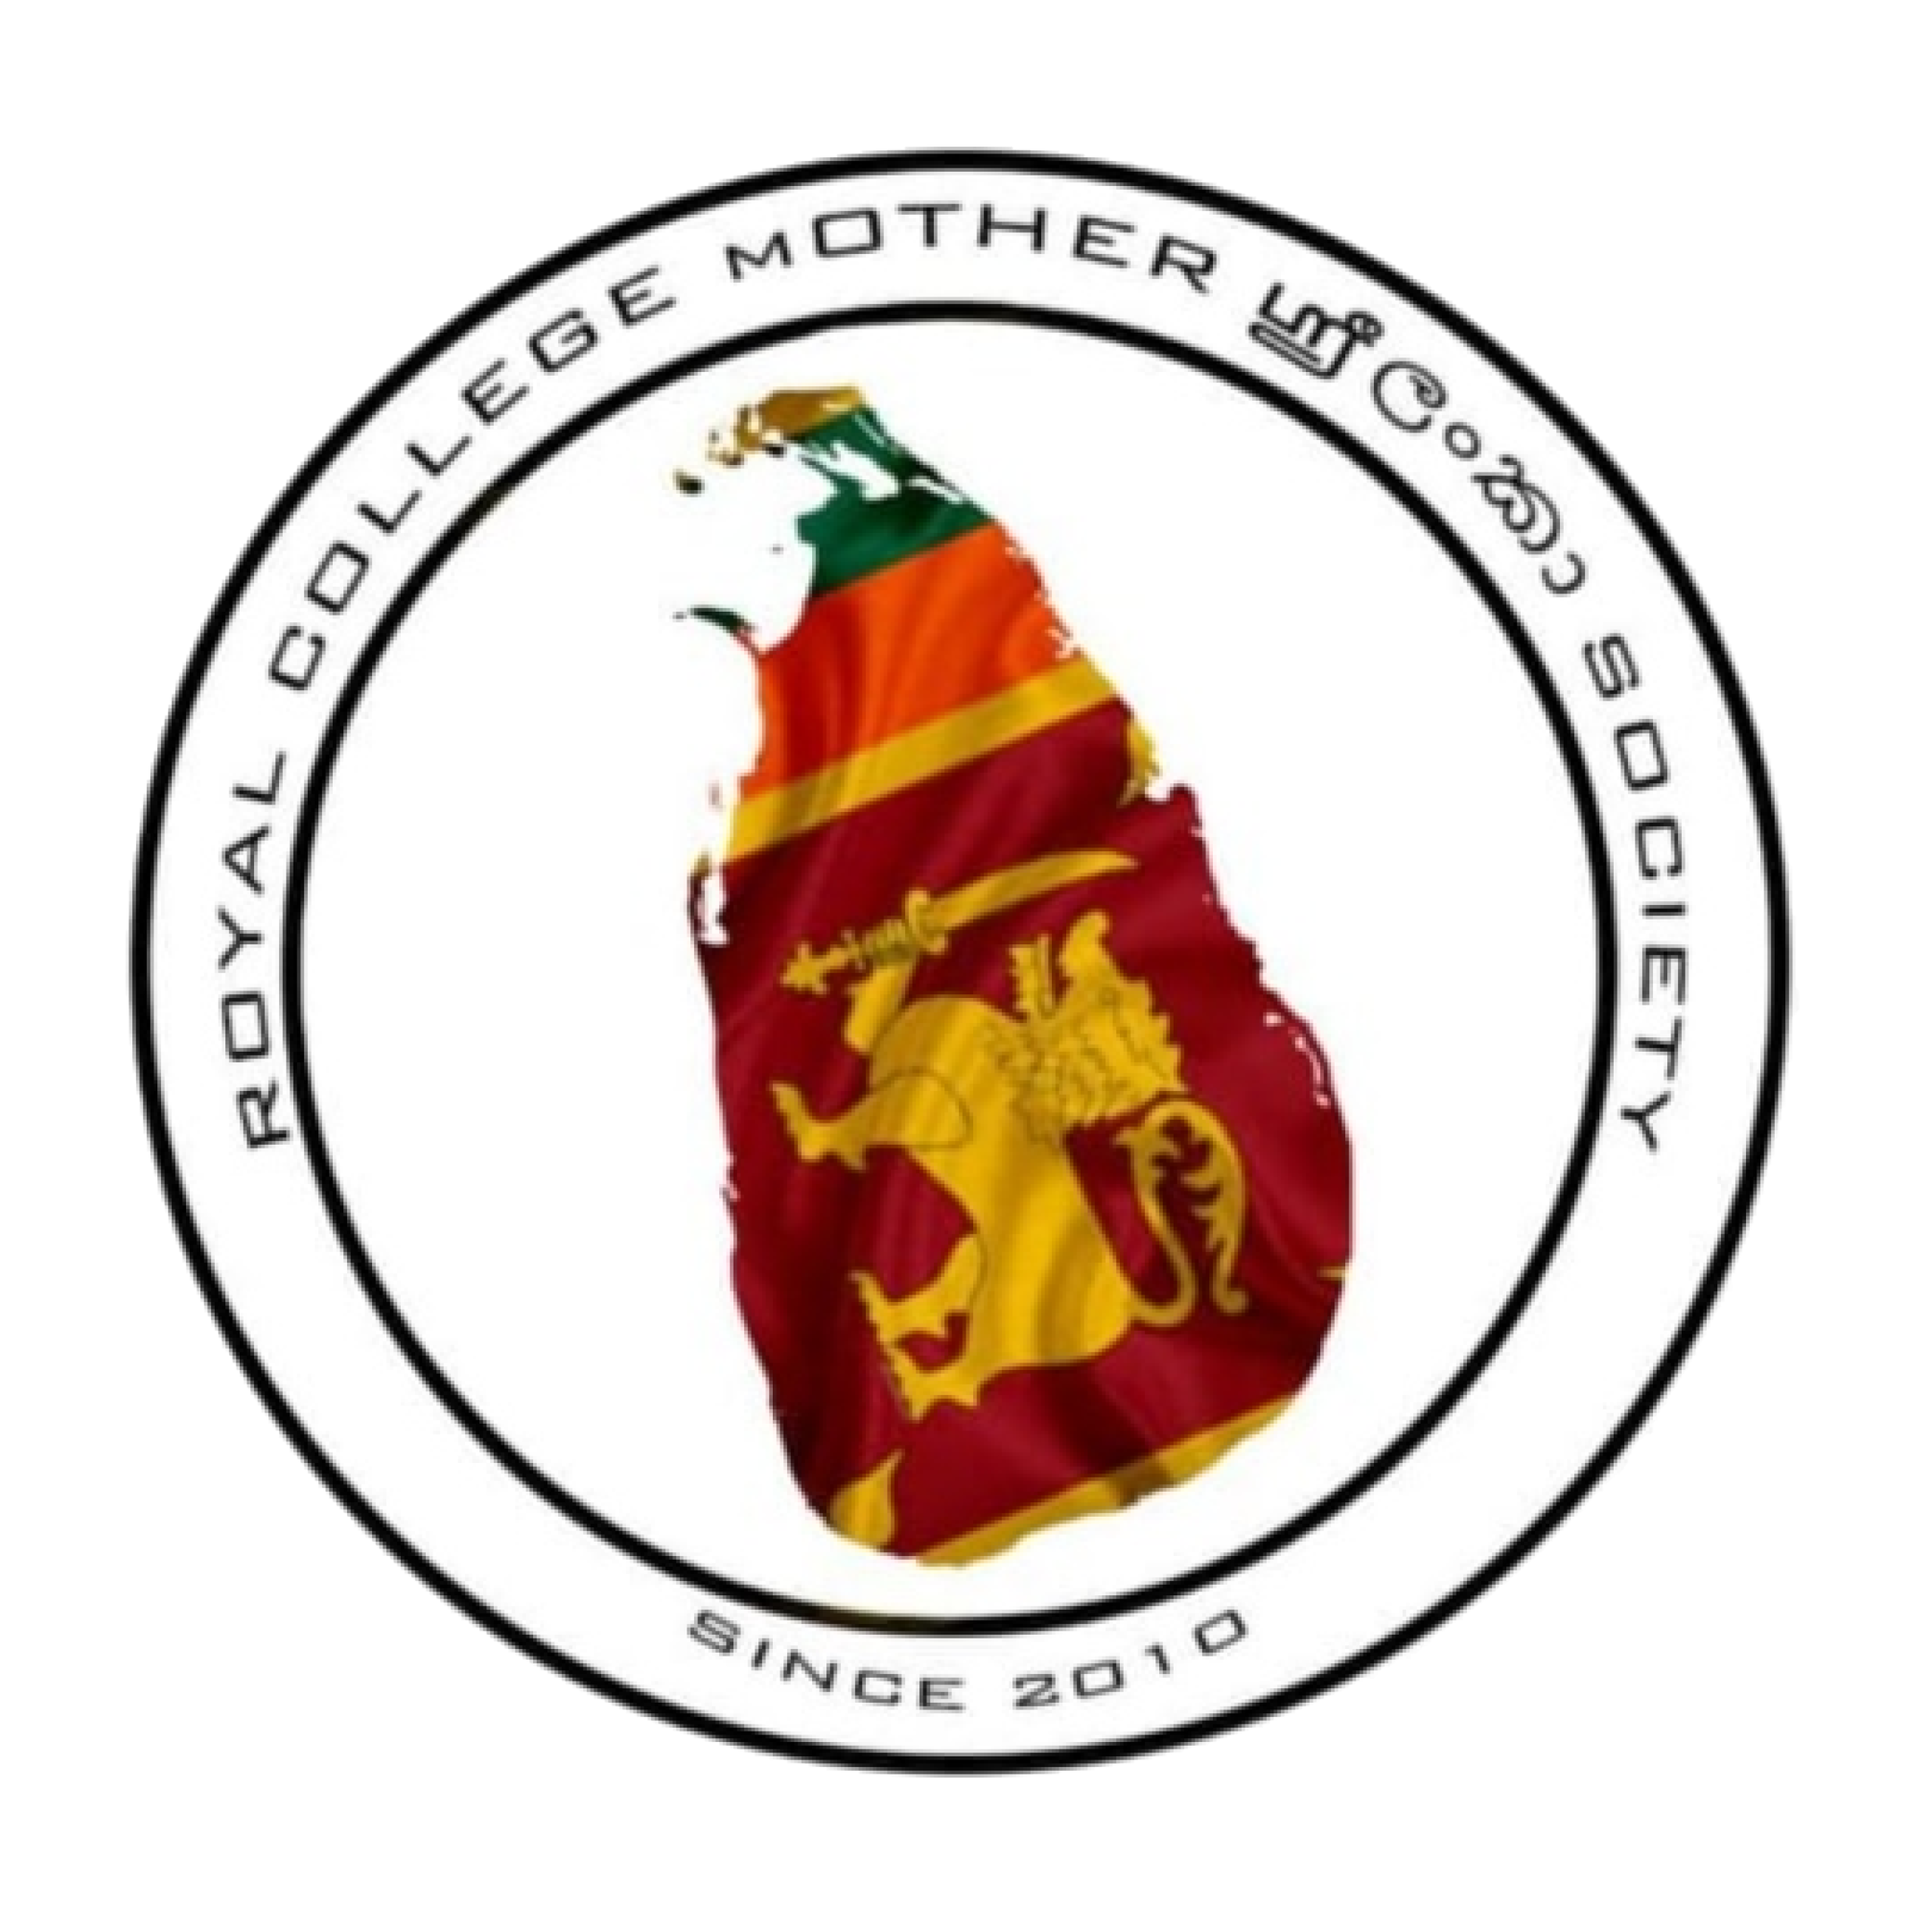 Mother Sri Lanka - The Royal College